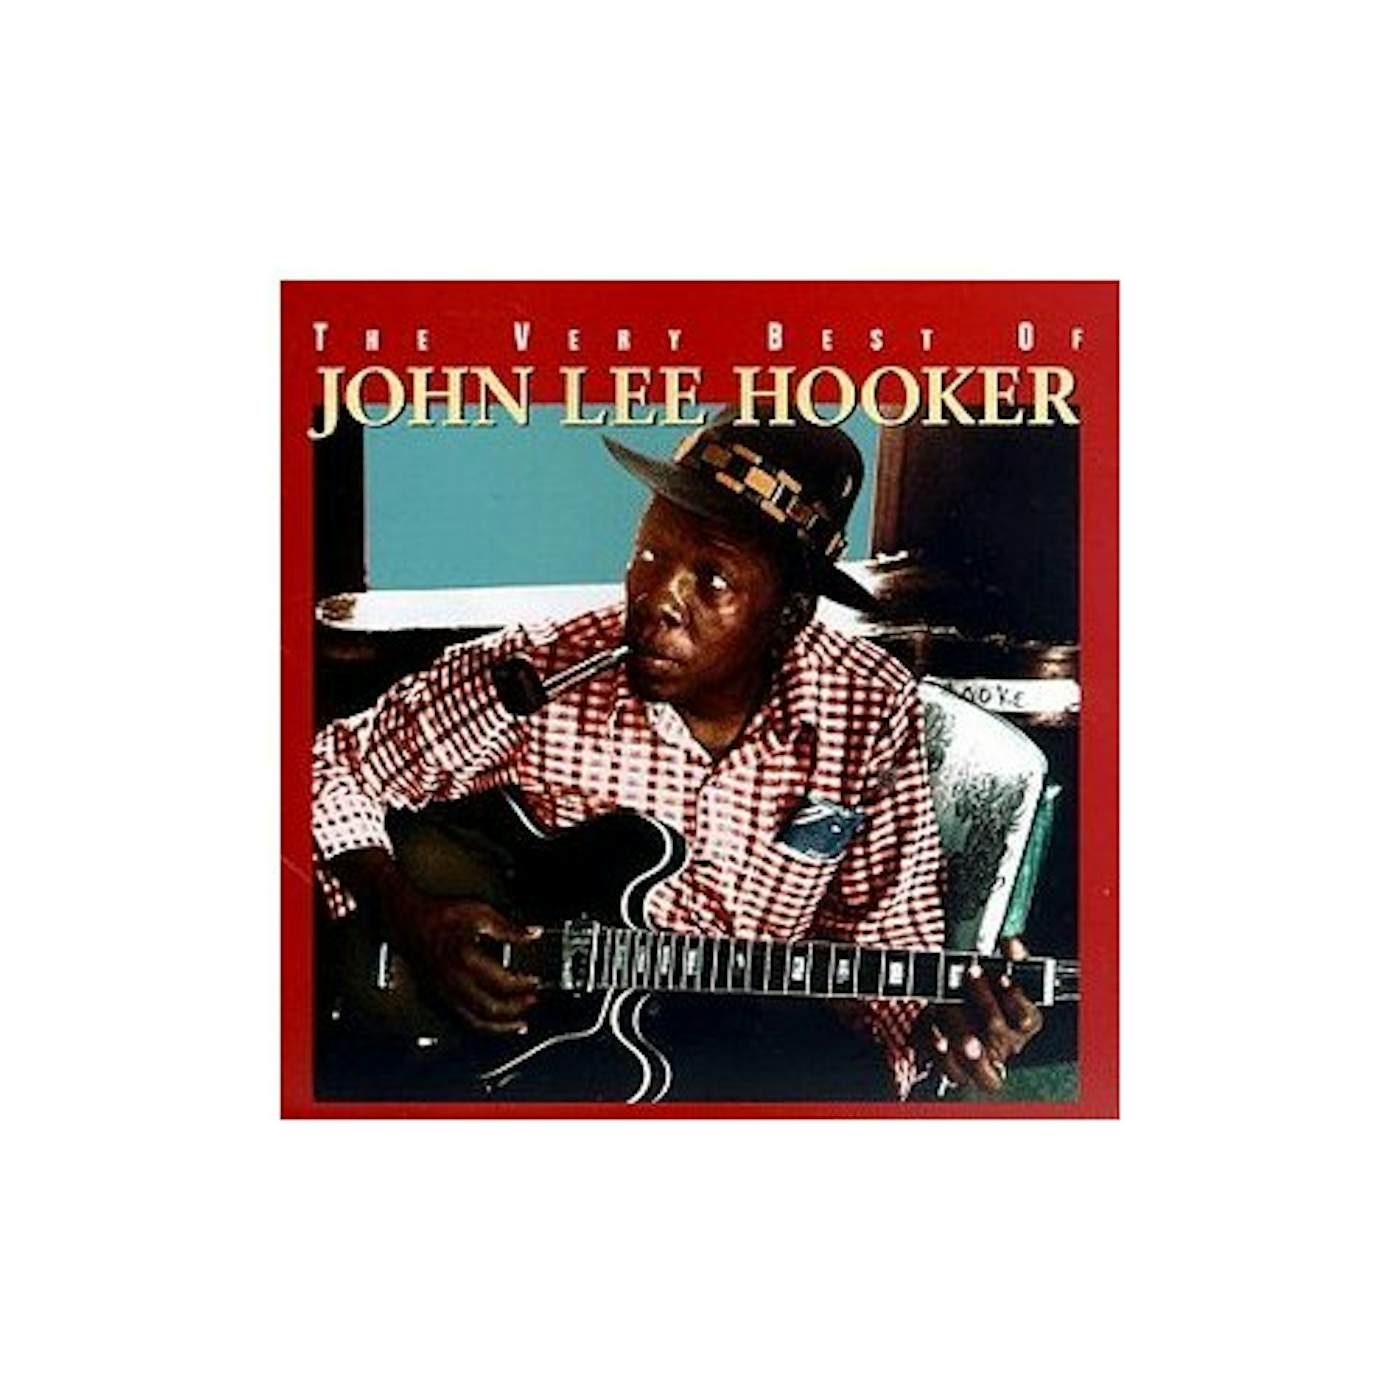 John Lee Hooker VERY BEST OF CD